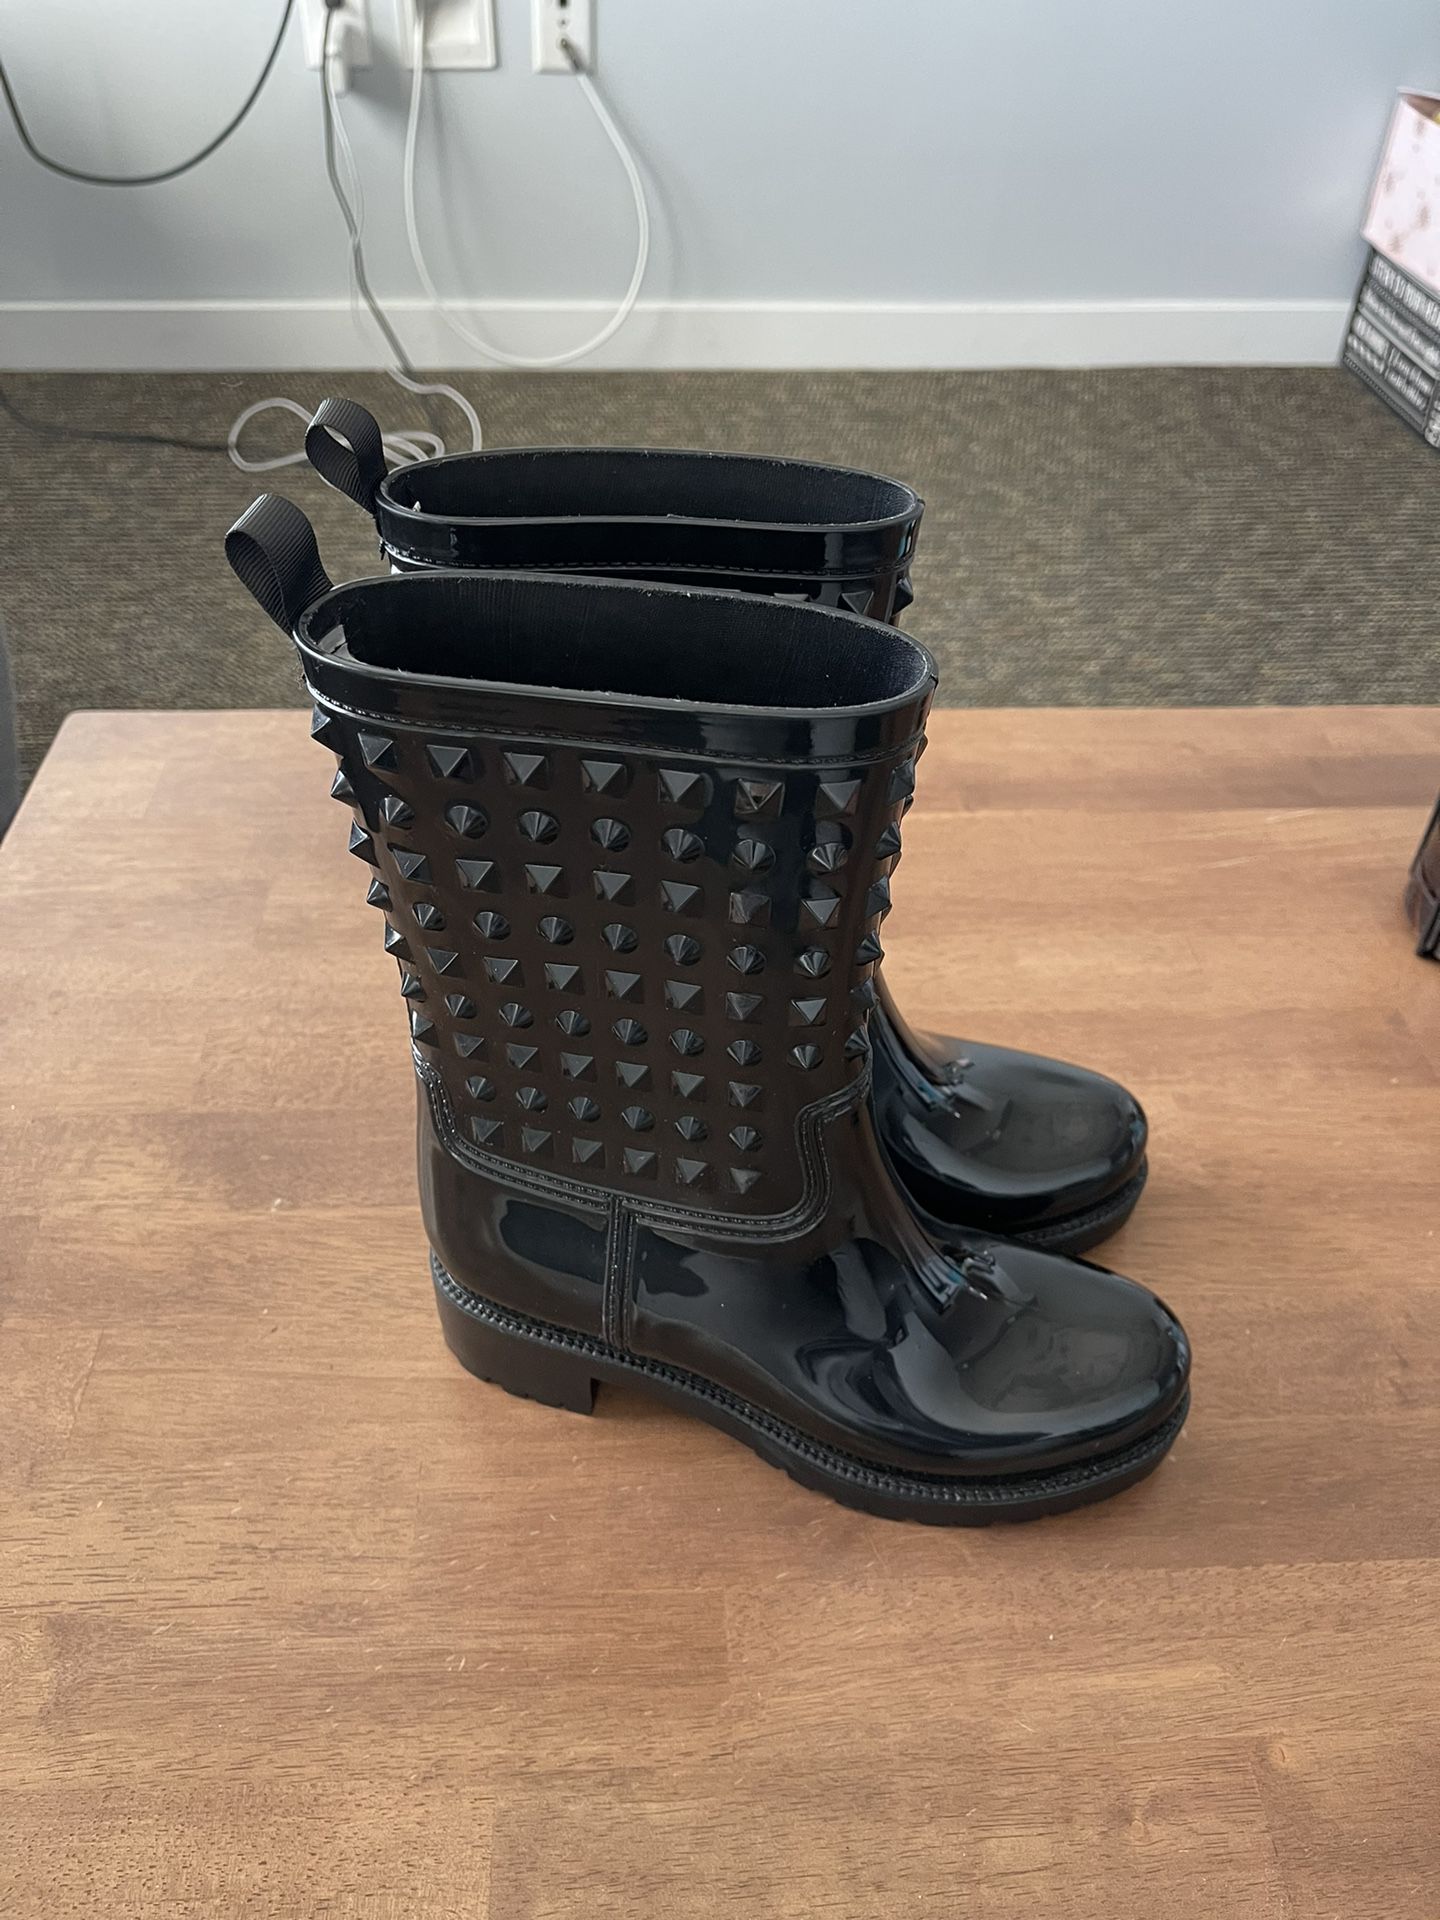 Capelli Studded Black Rain Boots Size 6 